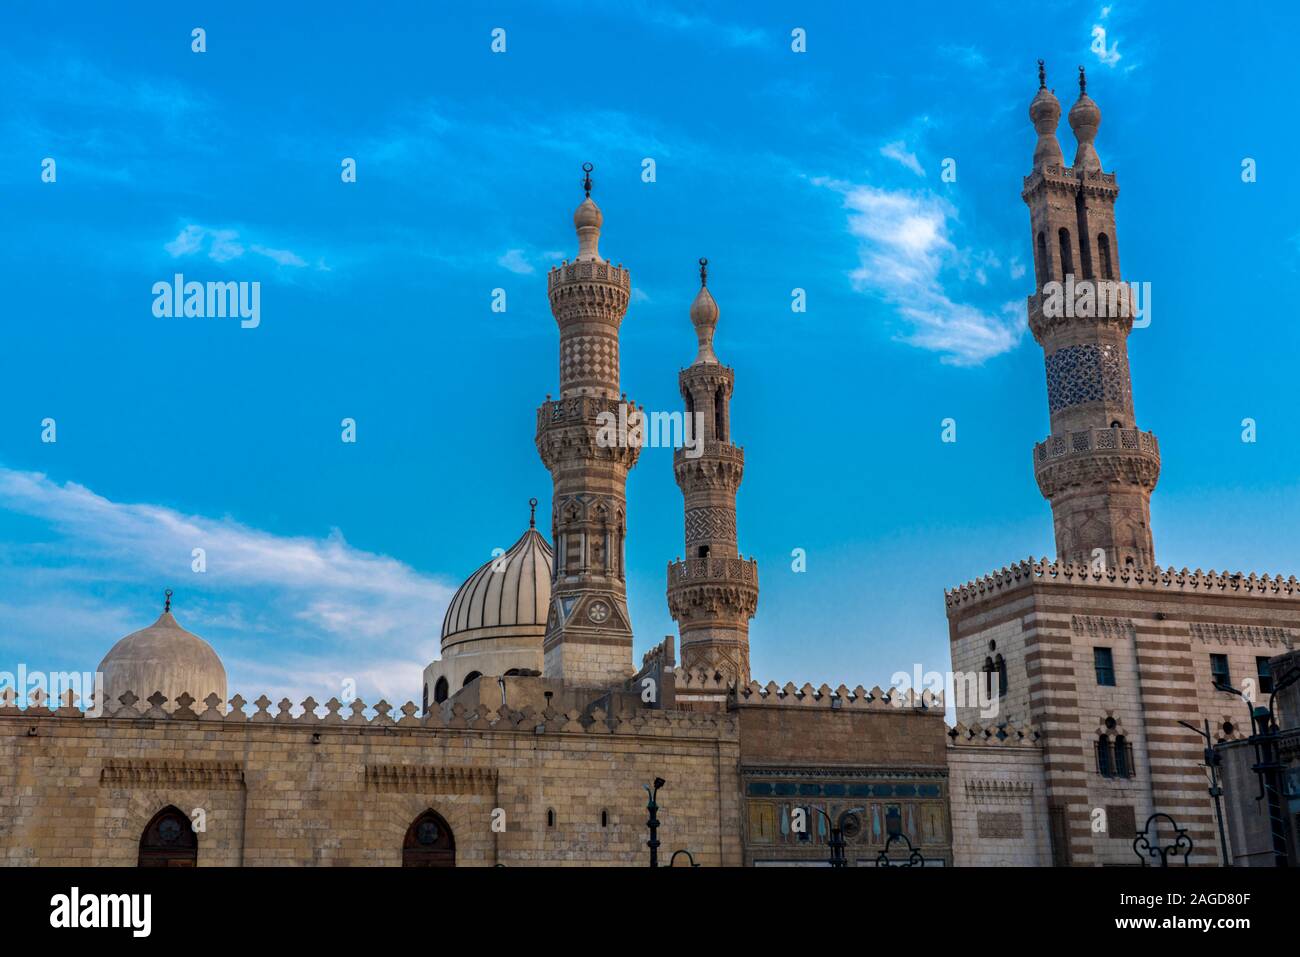 NOVEMBER, 2019 CAIRO EGYPT - Moslem m,osque skyline with blue sky, Cairo,  Egypt Stock Photo